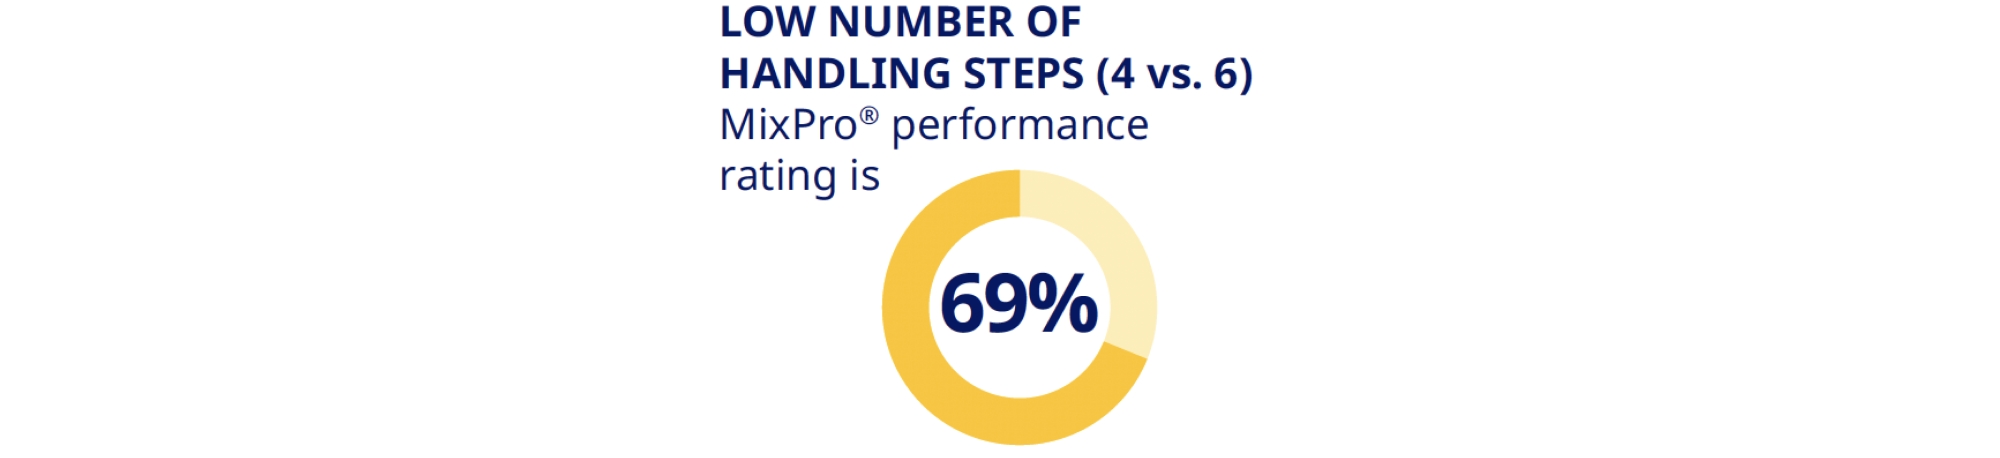 low number of handling steps